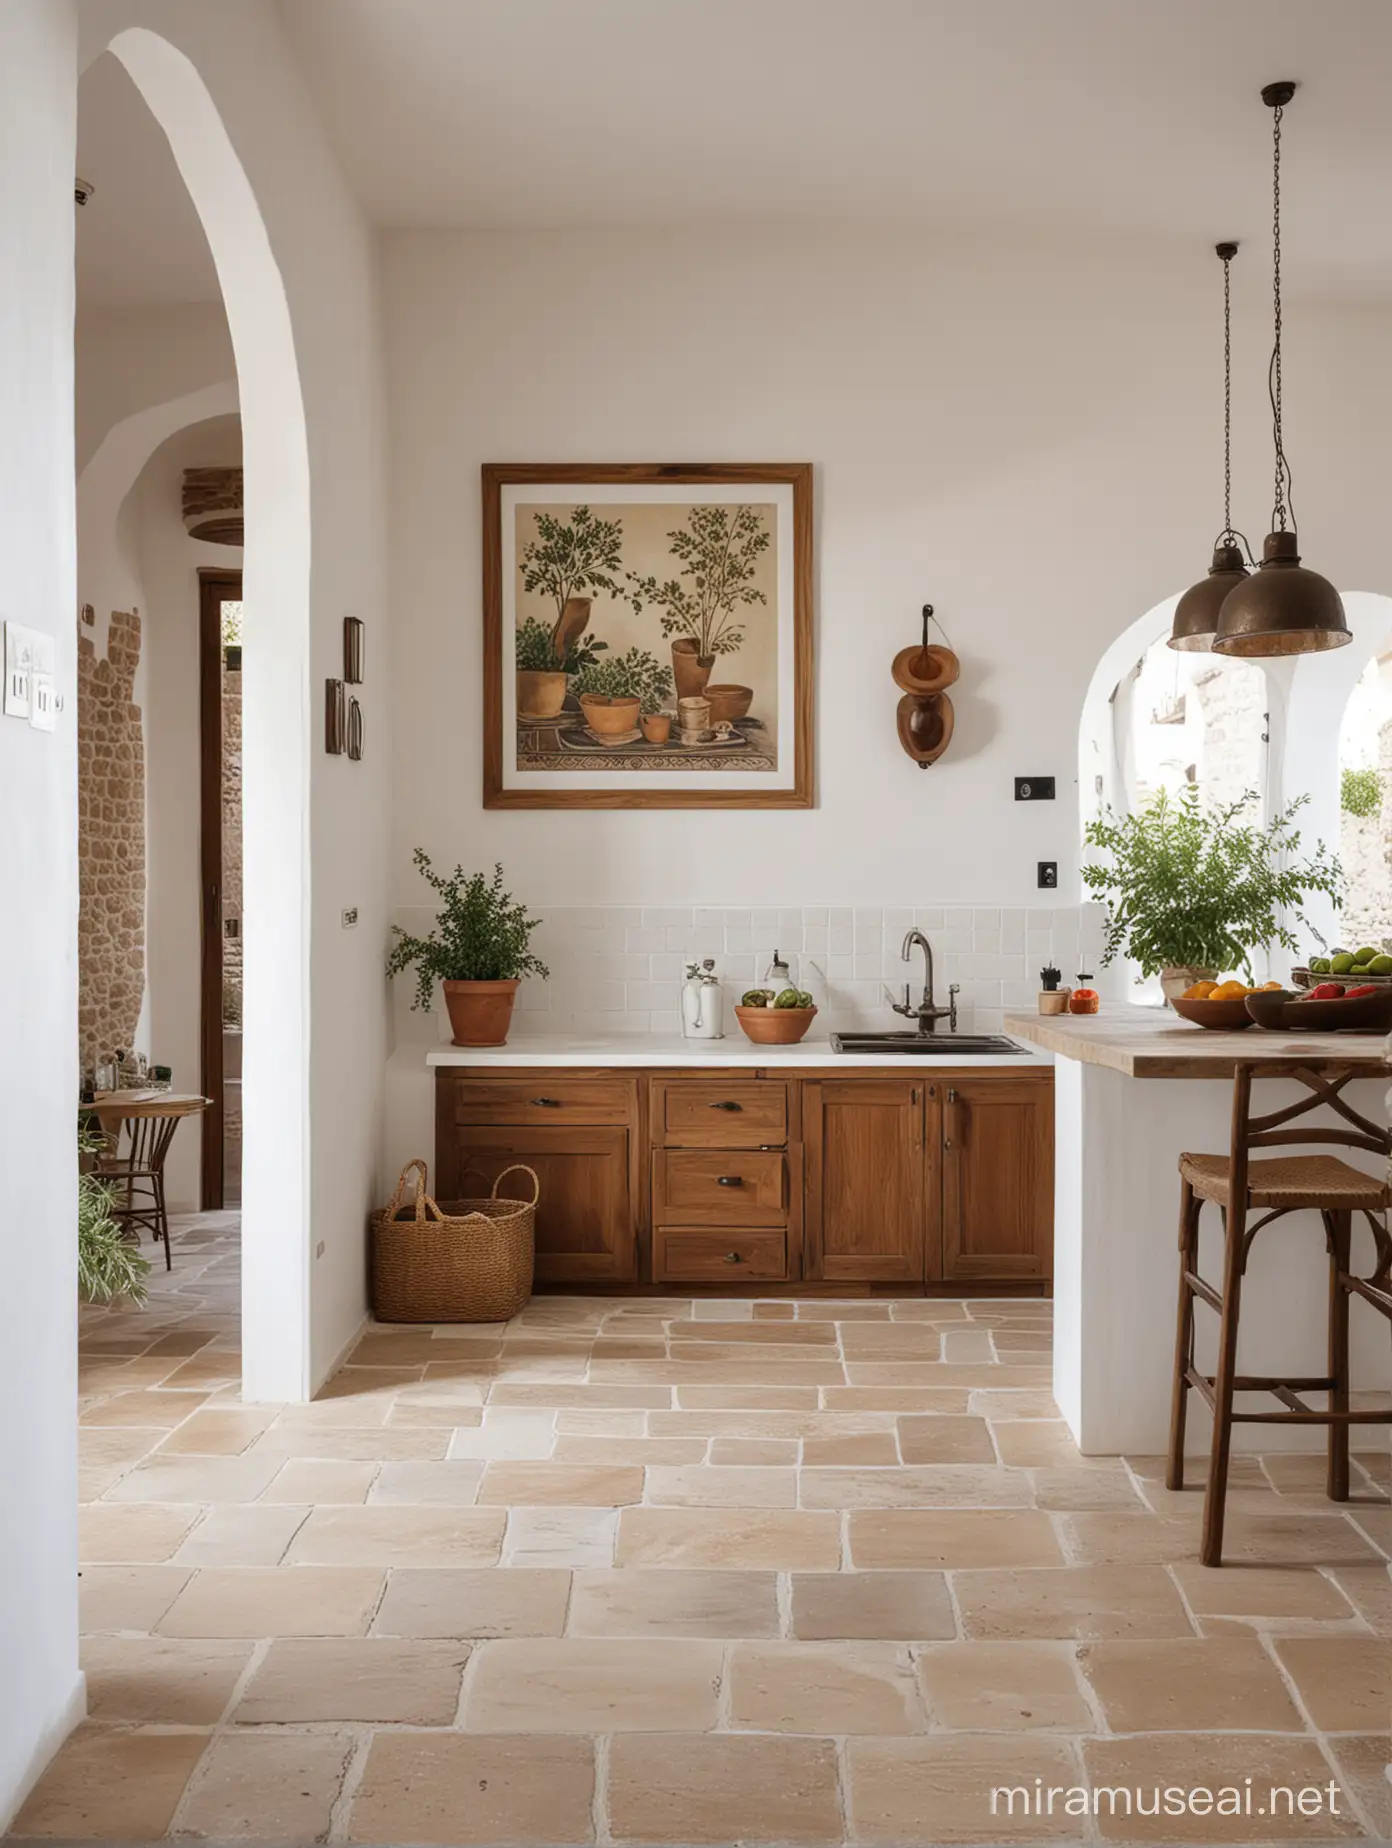 Wooden framed painting, on white wall, ratio 1:1, Mediterranean kitchen, stone floor